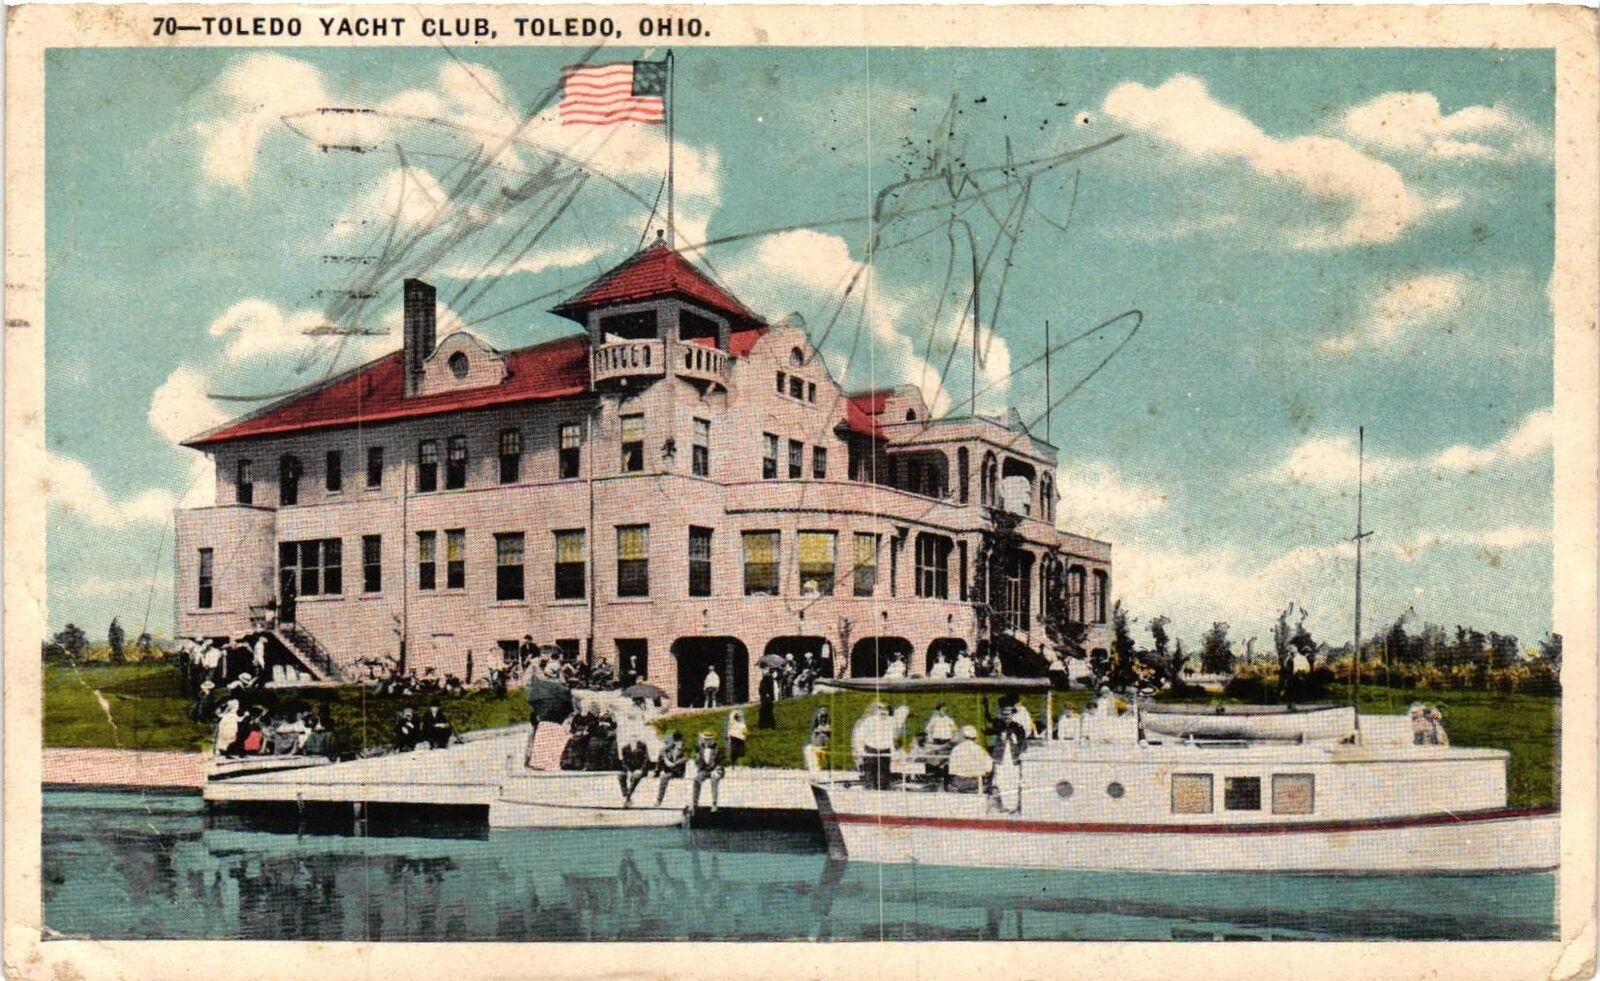 Vintage Postcard- TOLEDO YACHT CLUB, TOLEDO, OH. Early 1900s